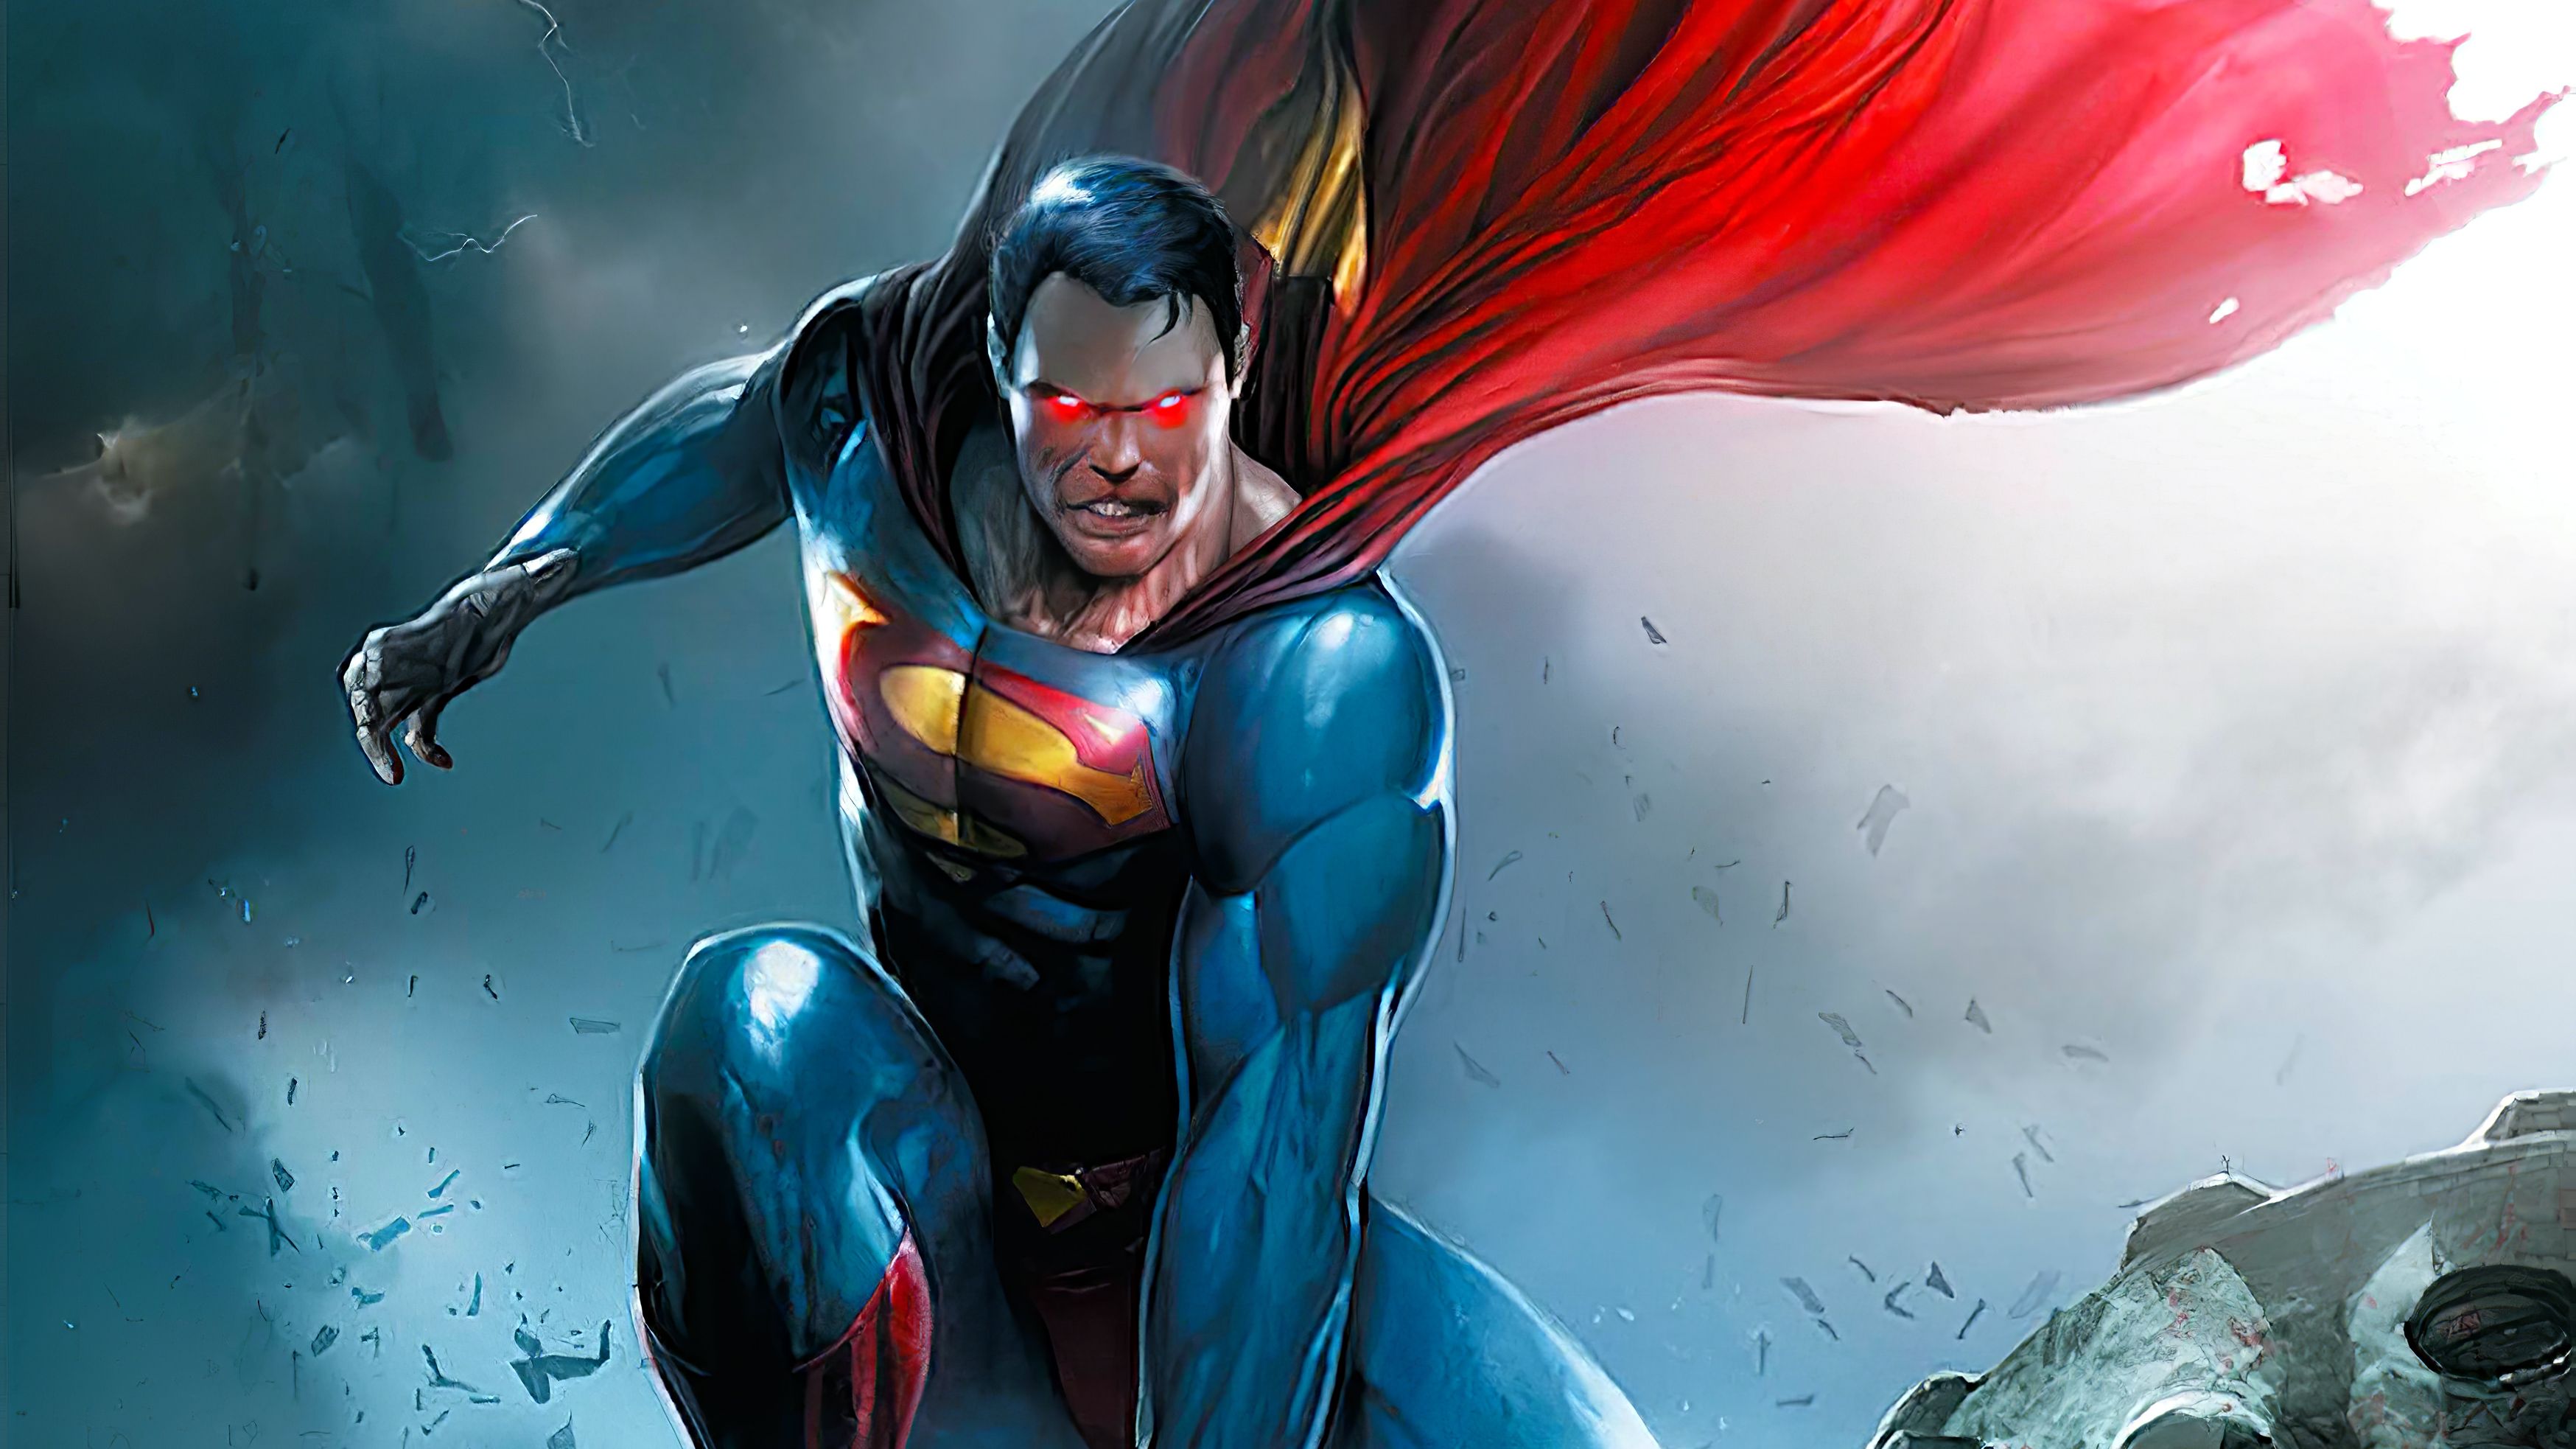 Superman Red Cape Up, HD Superheroes, 4k Wallpaper, Image